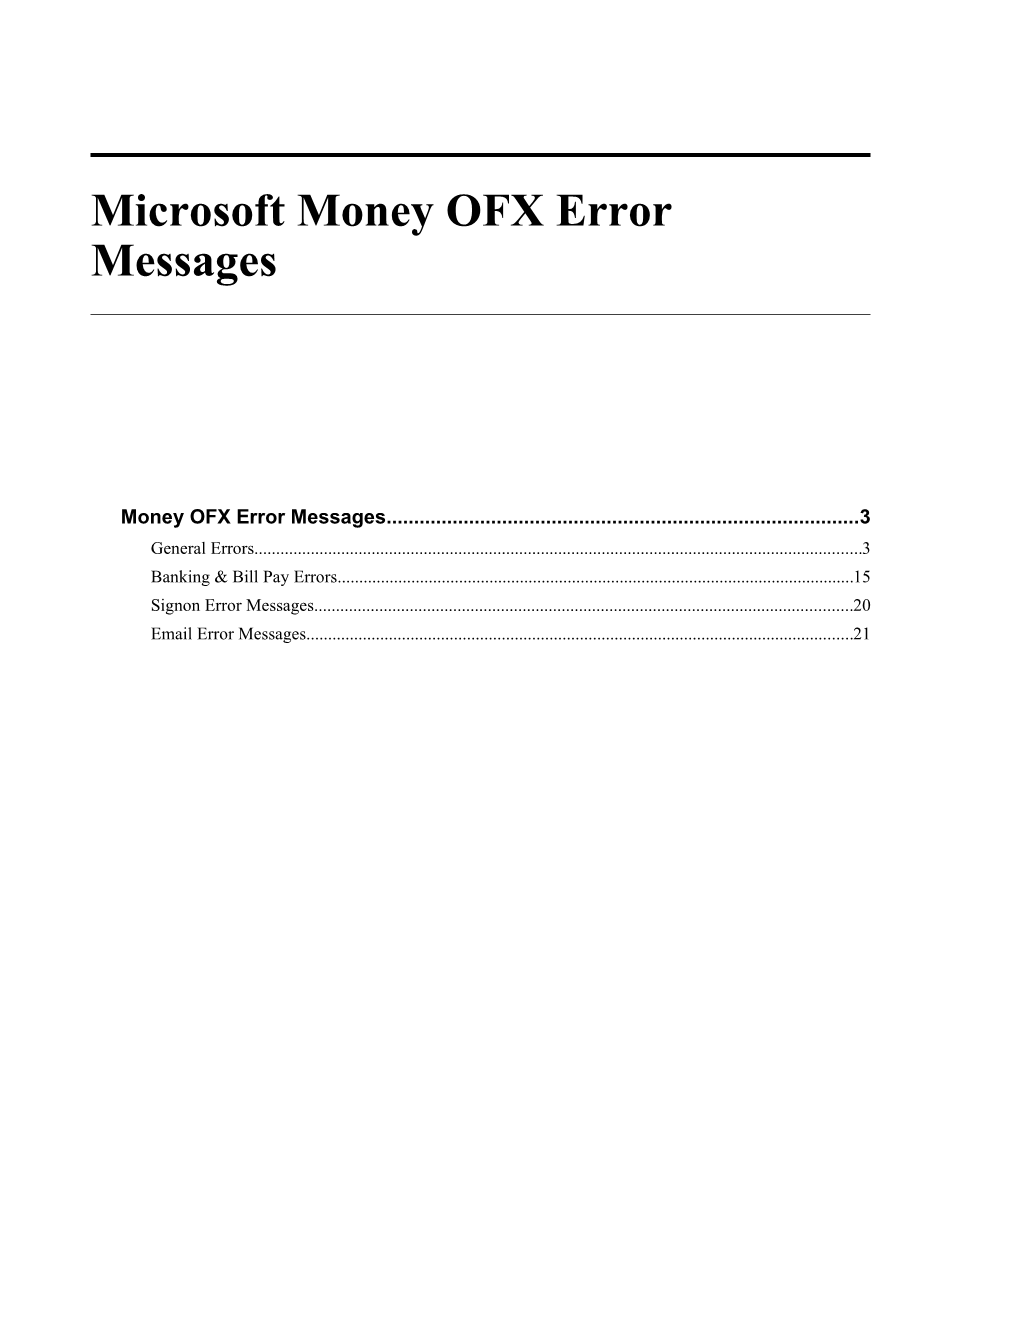 Microsoft Money OFX Error Messages